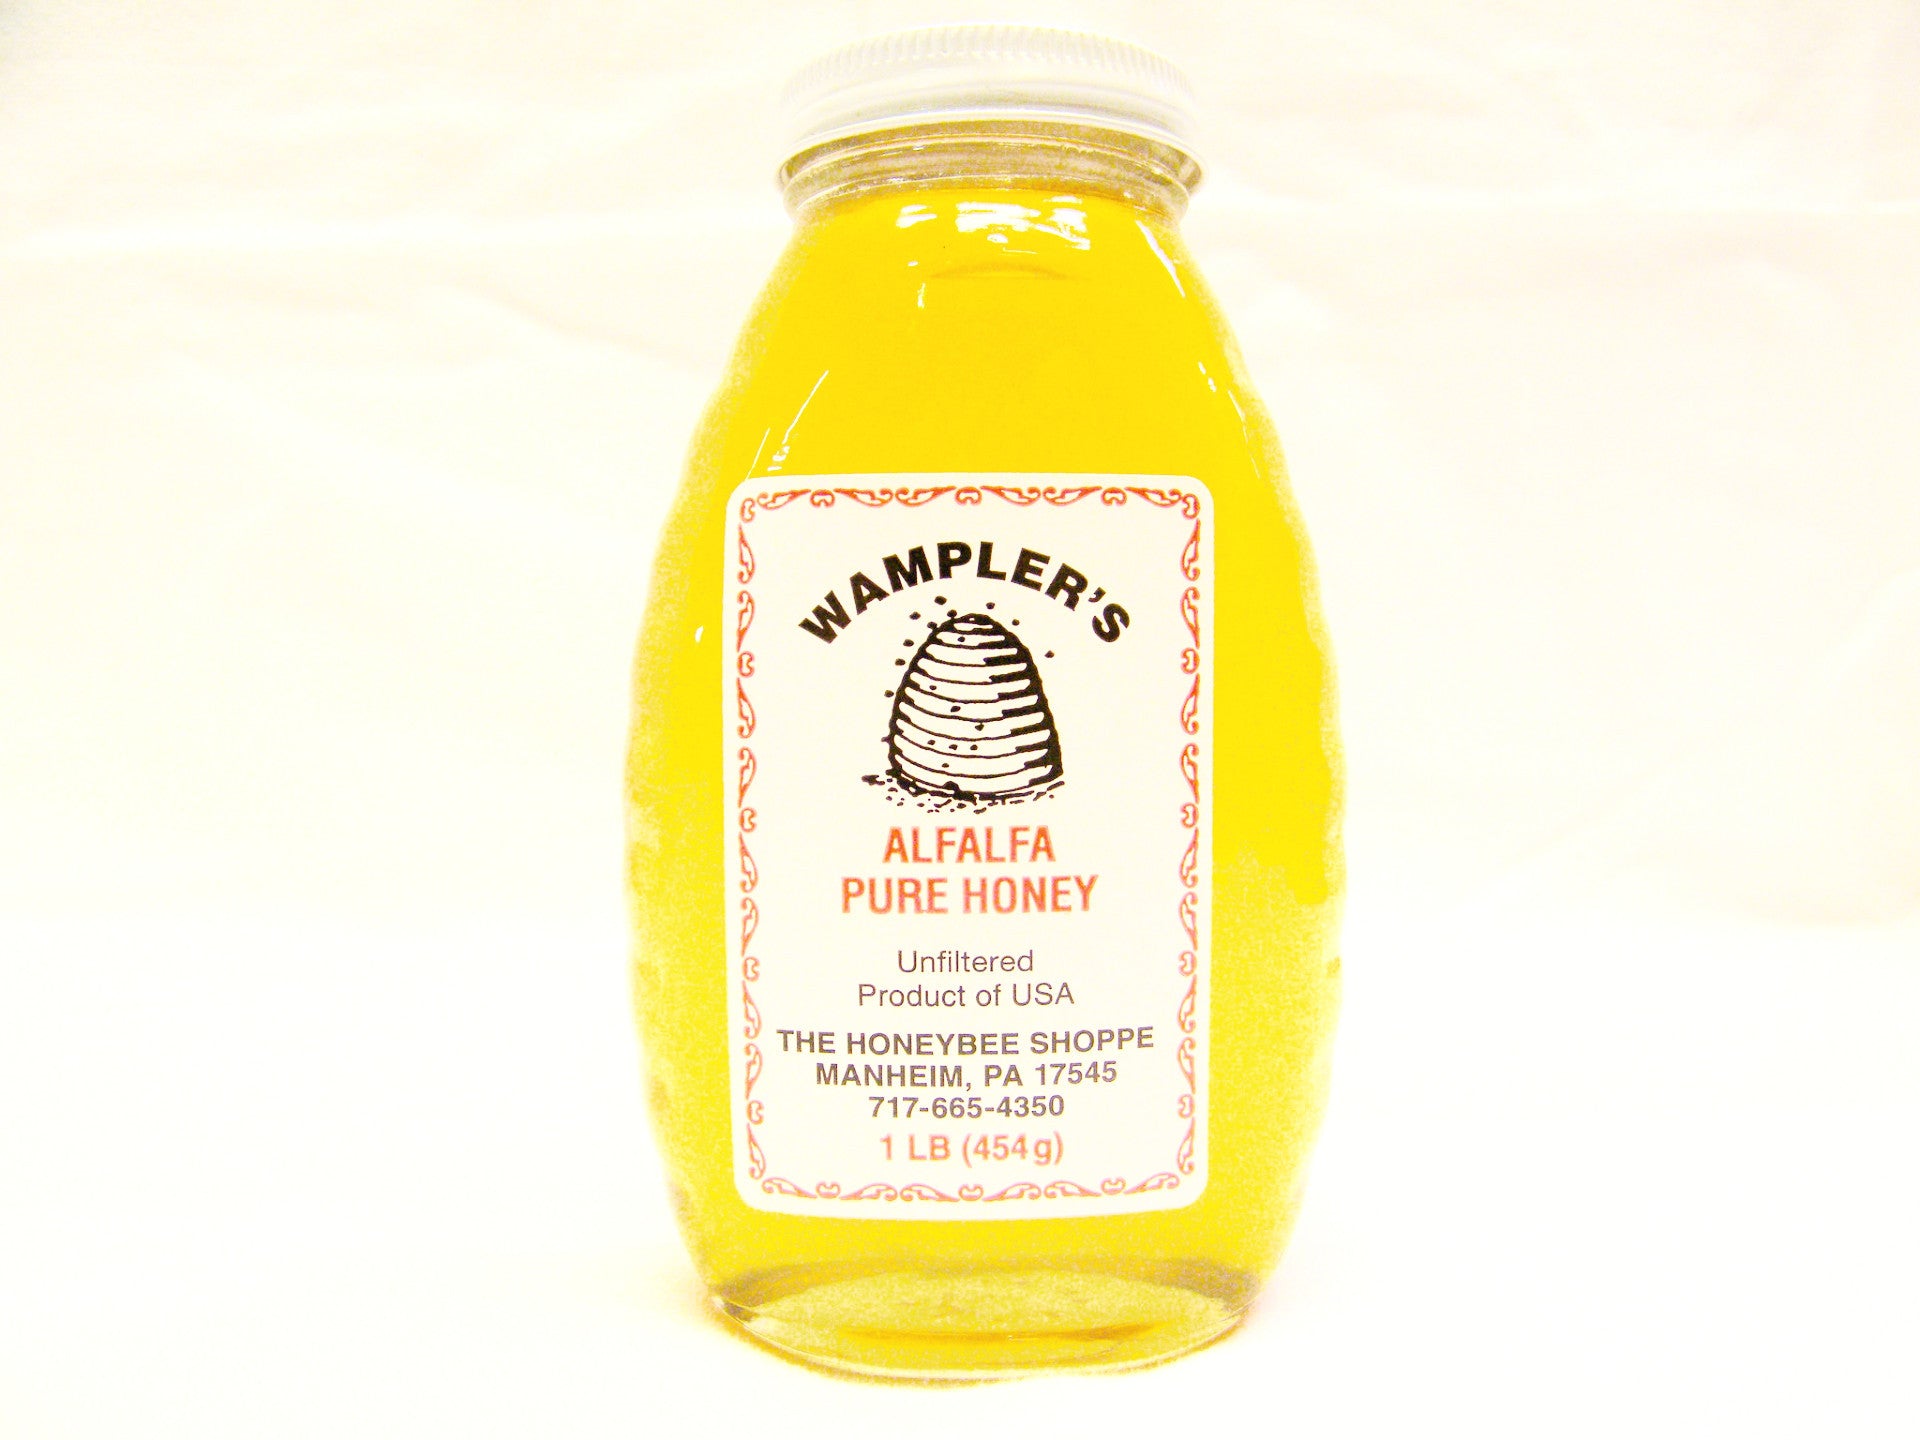 Wampler's Alfalfa Pure Honey